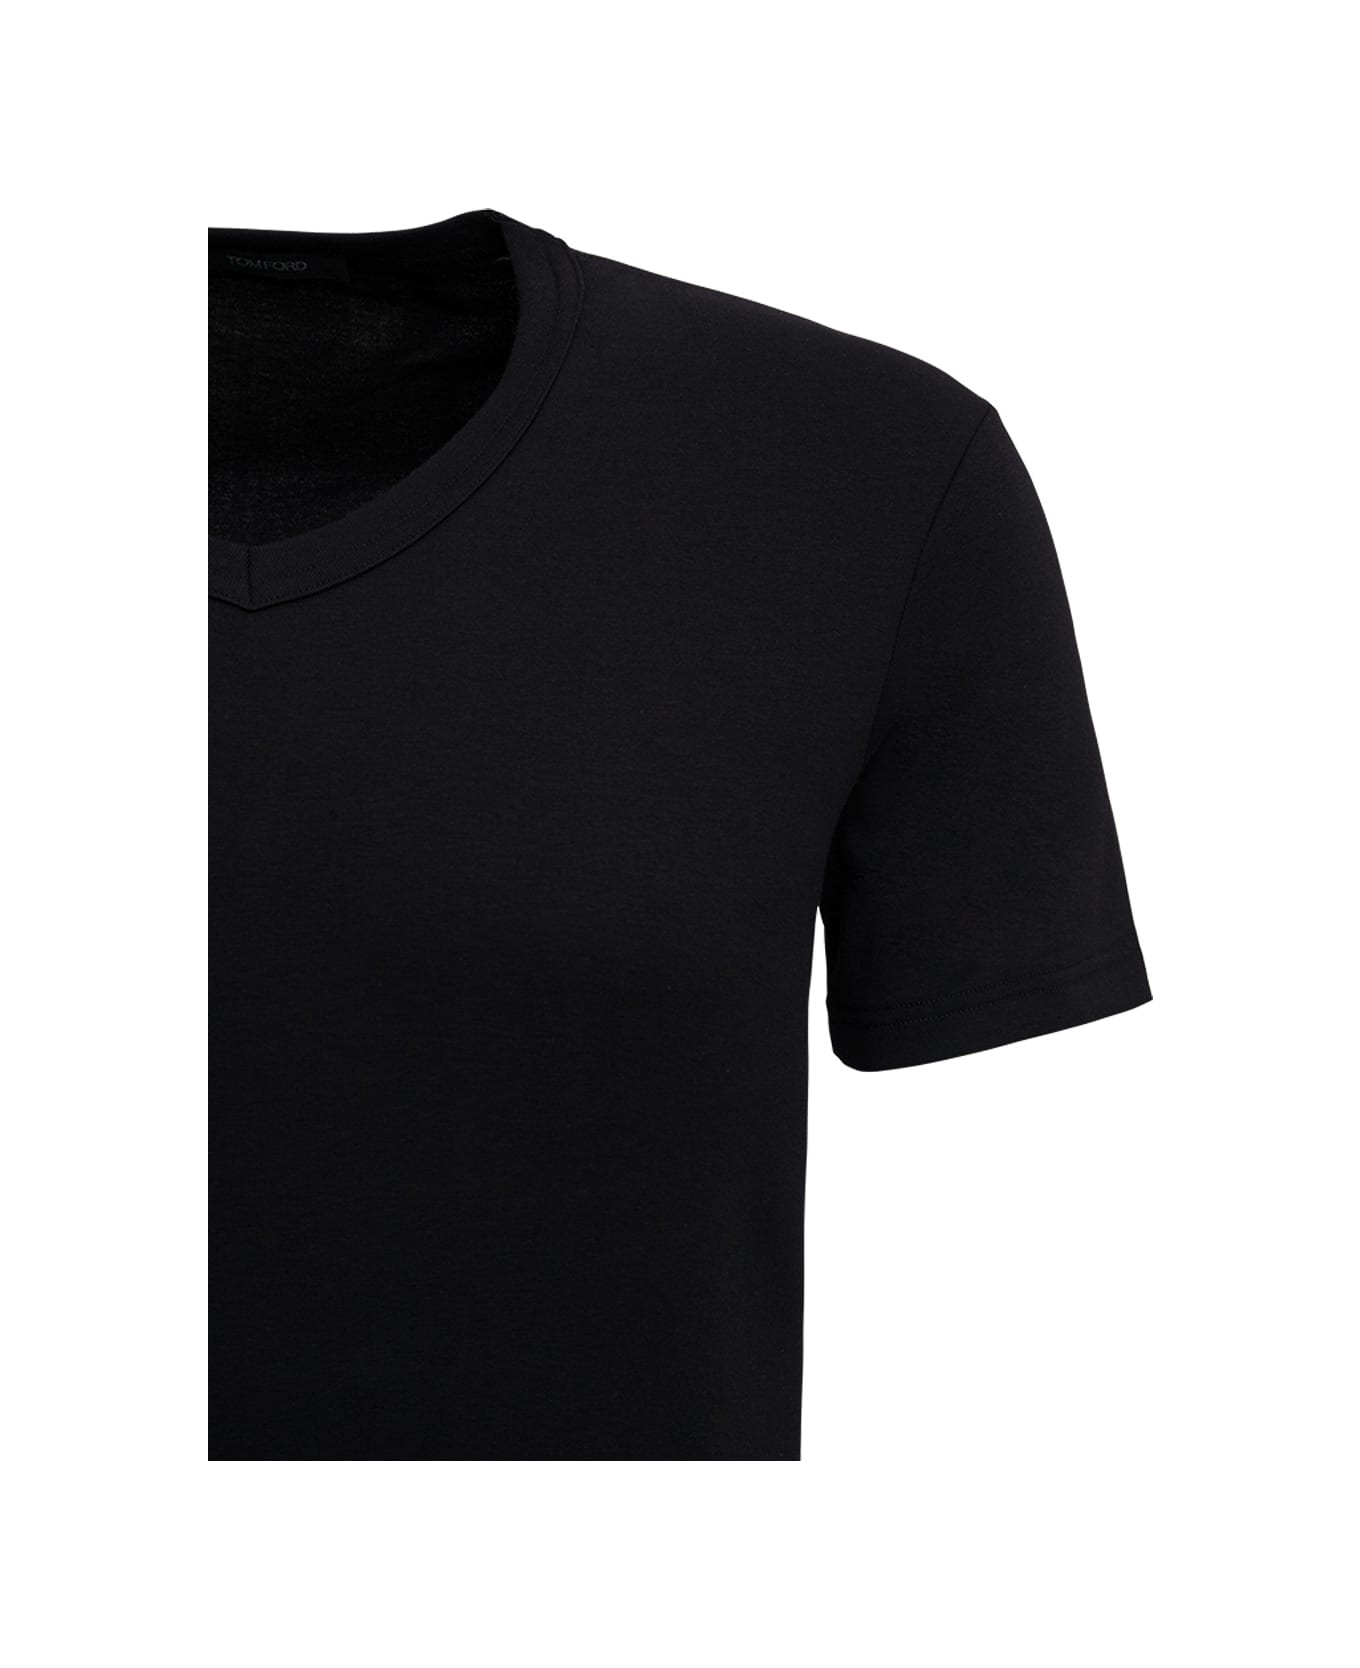 Tom Ford Man's Black Stretch Cotton V-neck Tshirt - Black